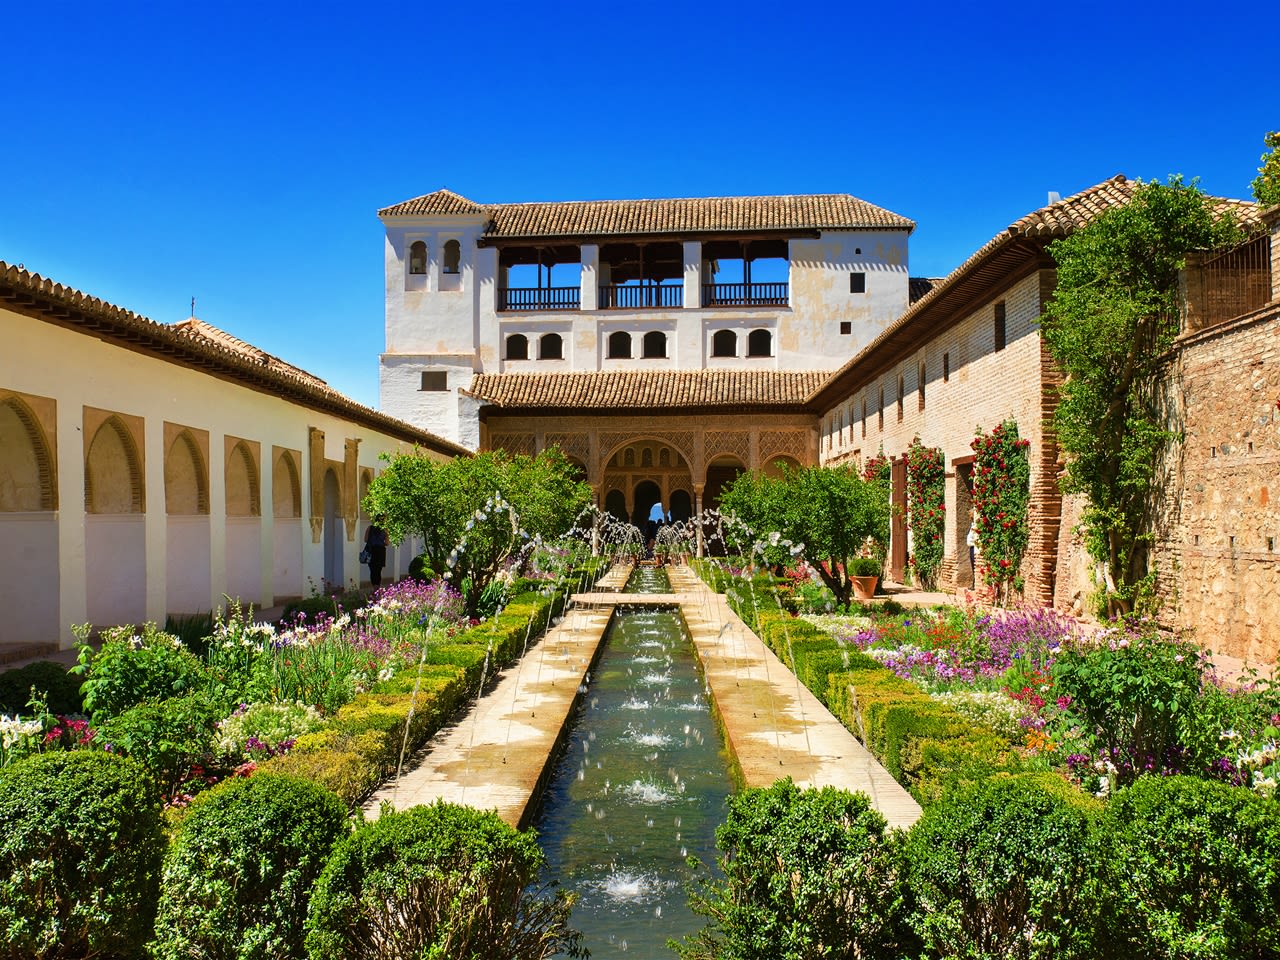 File:Interior Palacio Nazarí Alhambra Granada 2.jpg - Wikimedia Commons